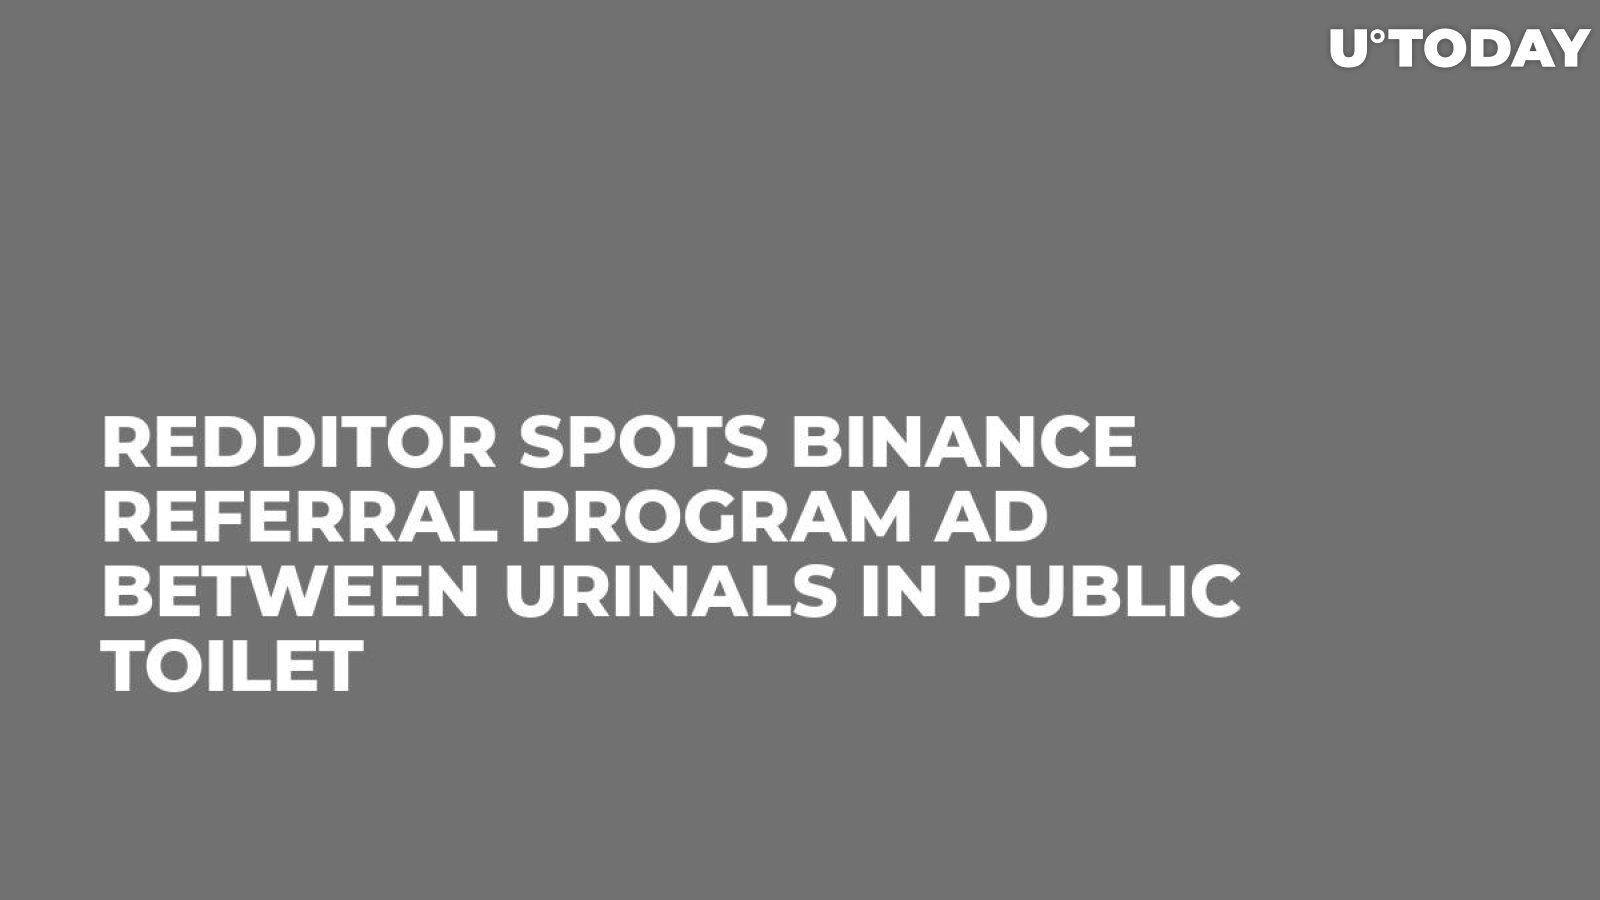 Redditor Spots Binance Referral Program Ad Between Urinals in Public Toilet